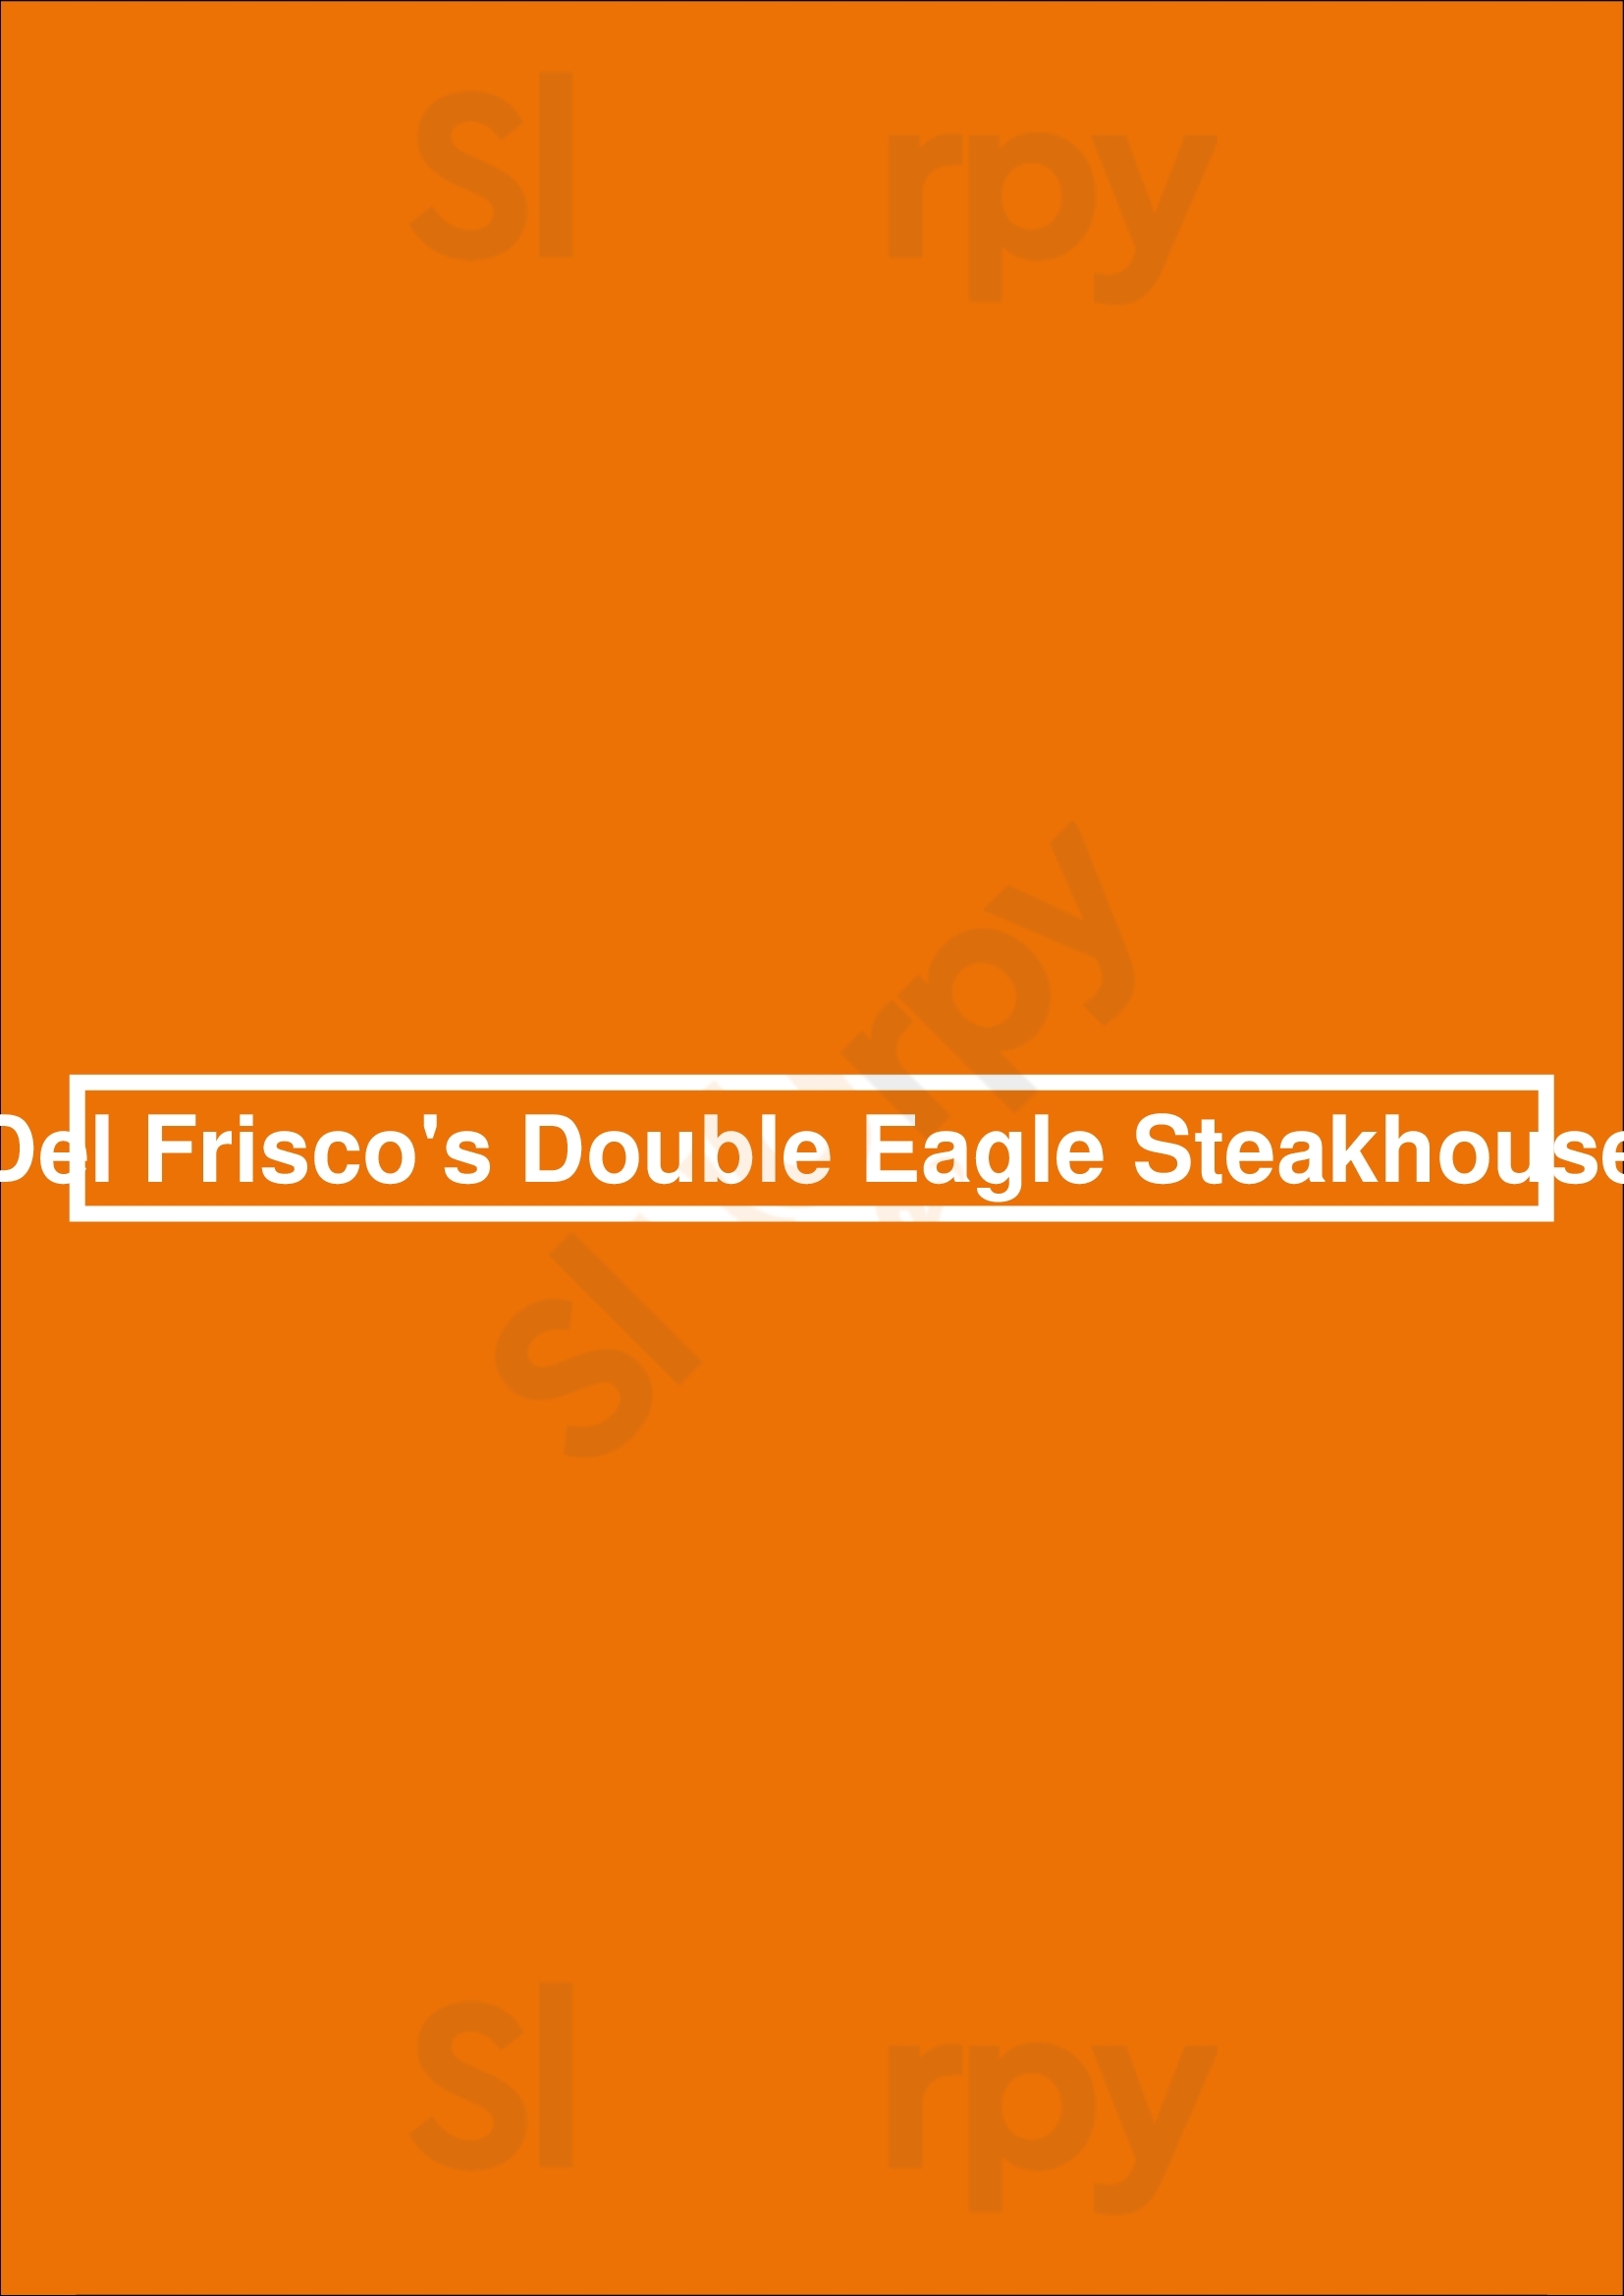 Del Frisco's Double Eagle Steakhouse Boston Menu - 1